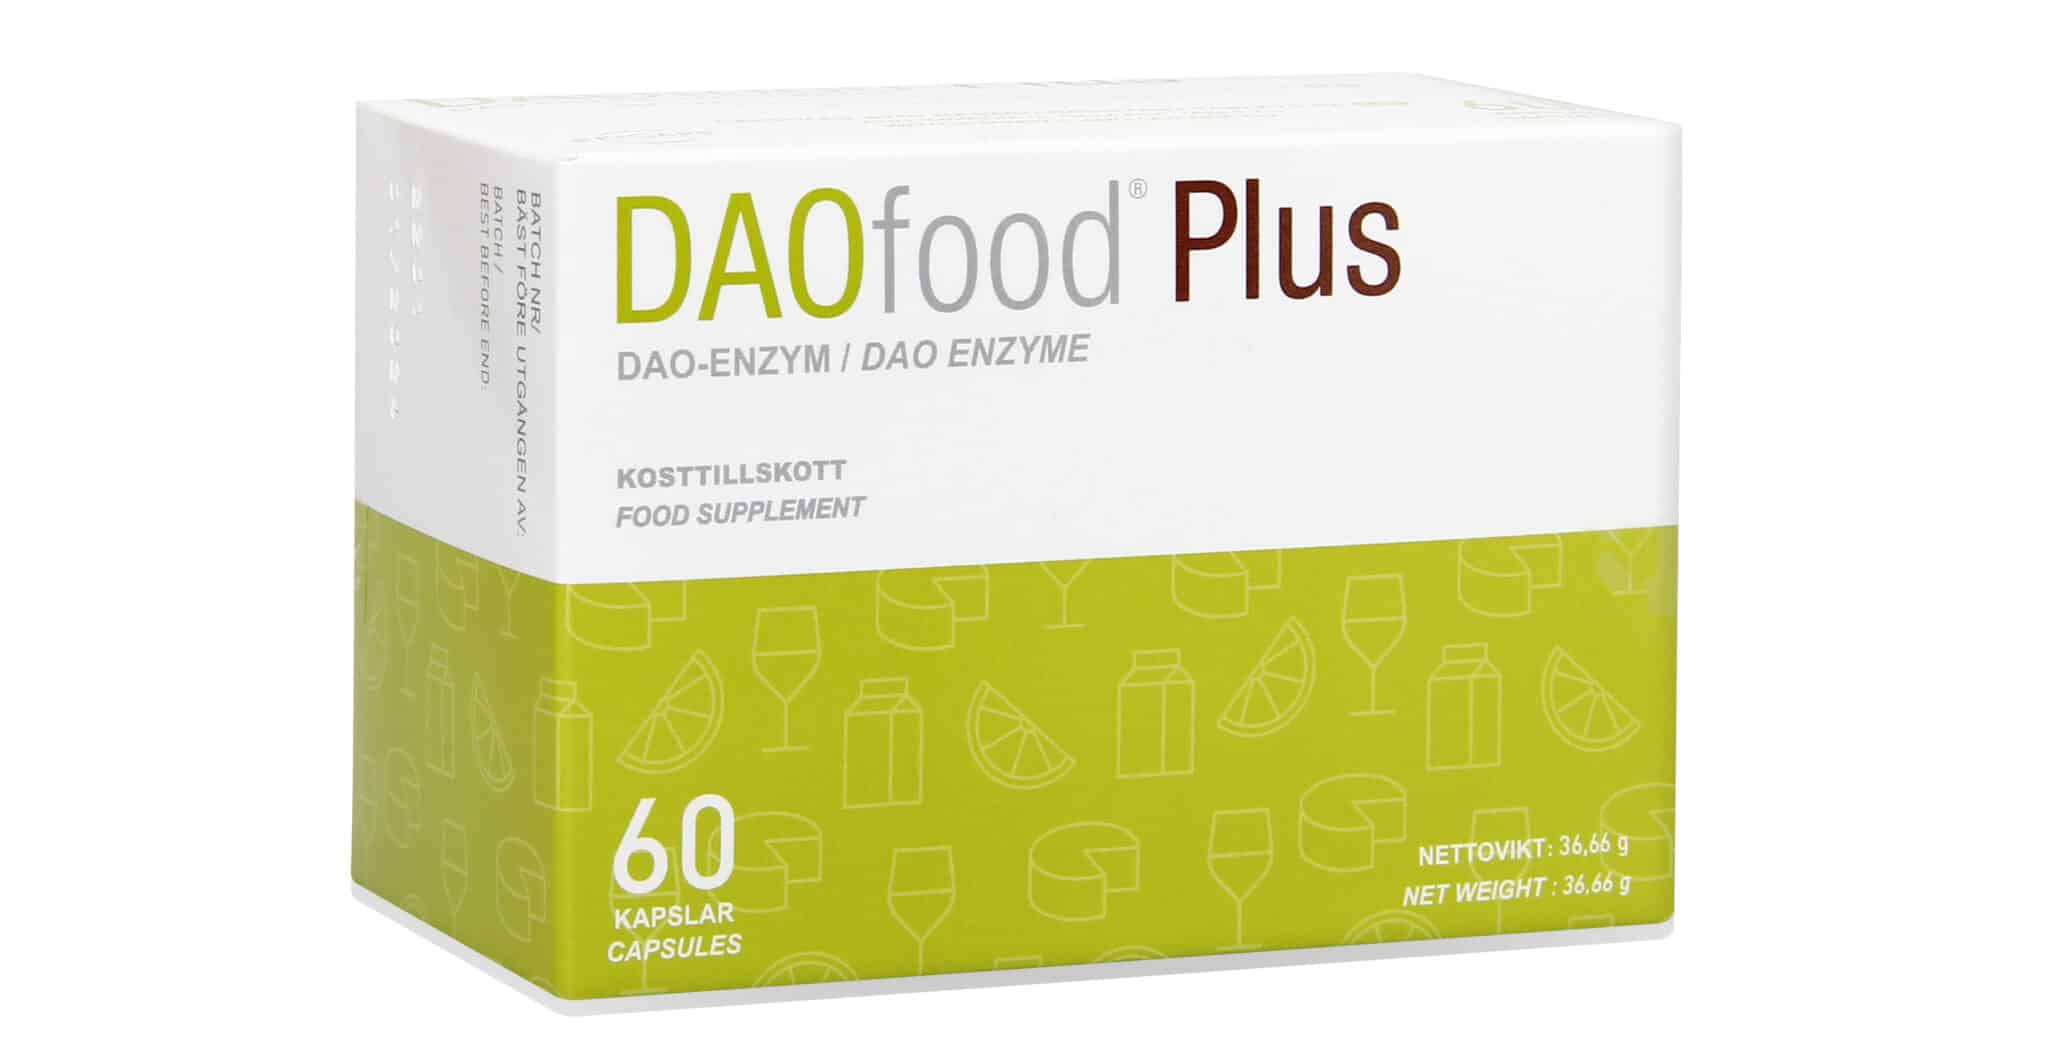 DAOfood Plus som innehåller DAO-enzym, quercetin samt C-vitamin.